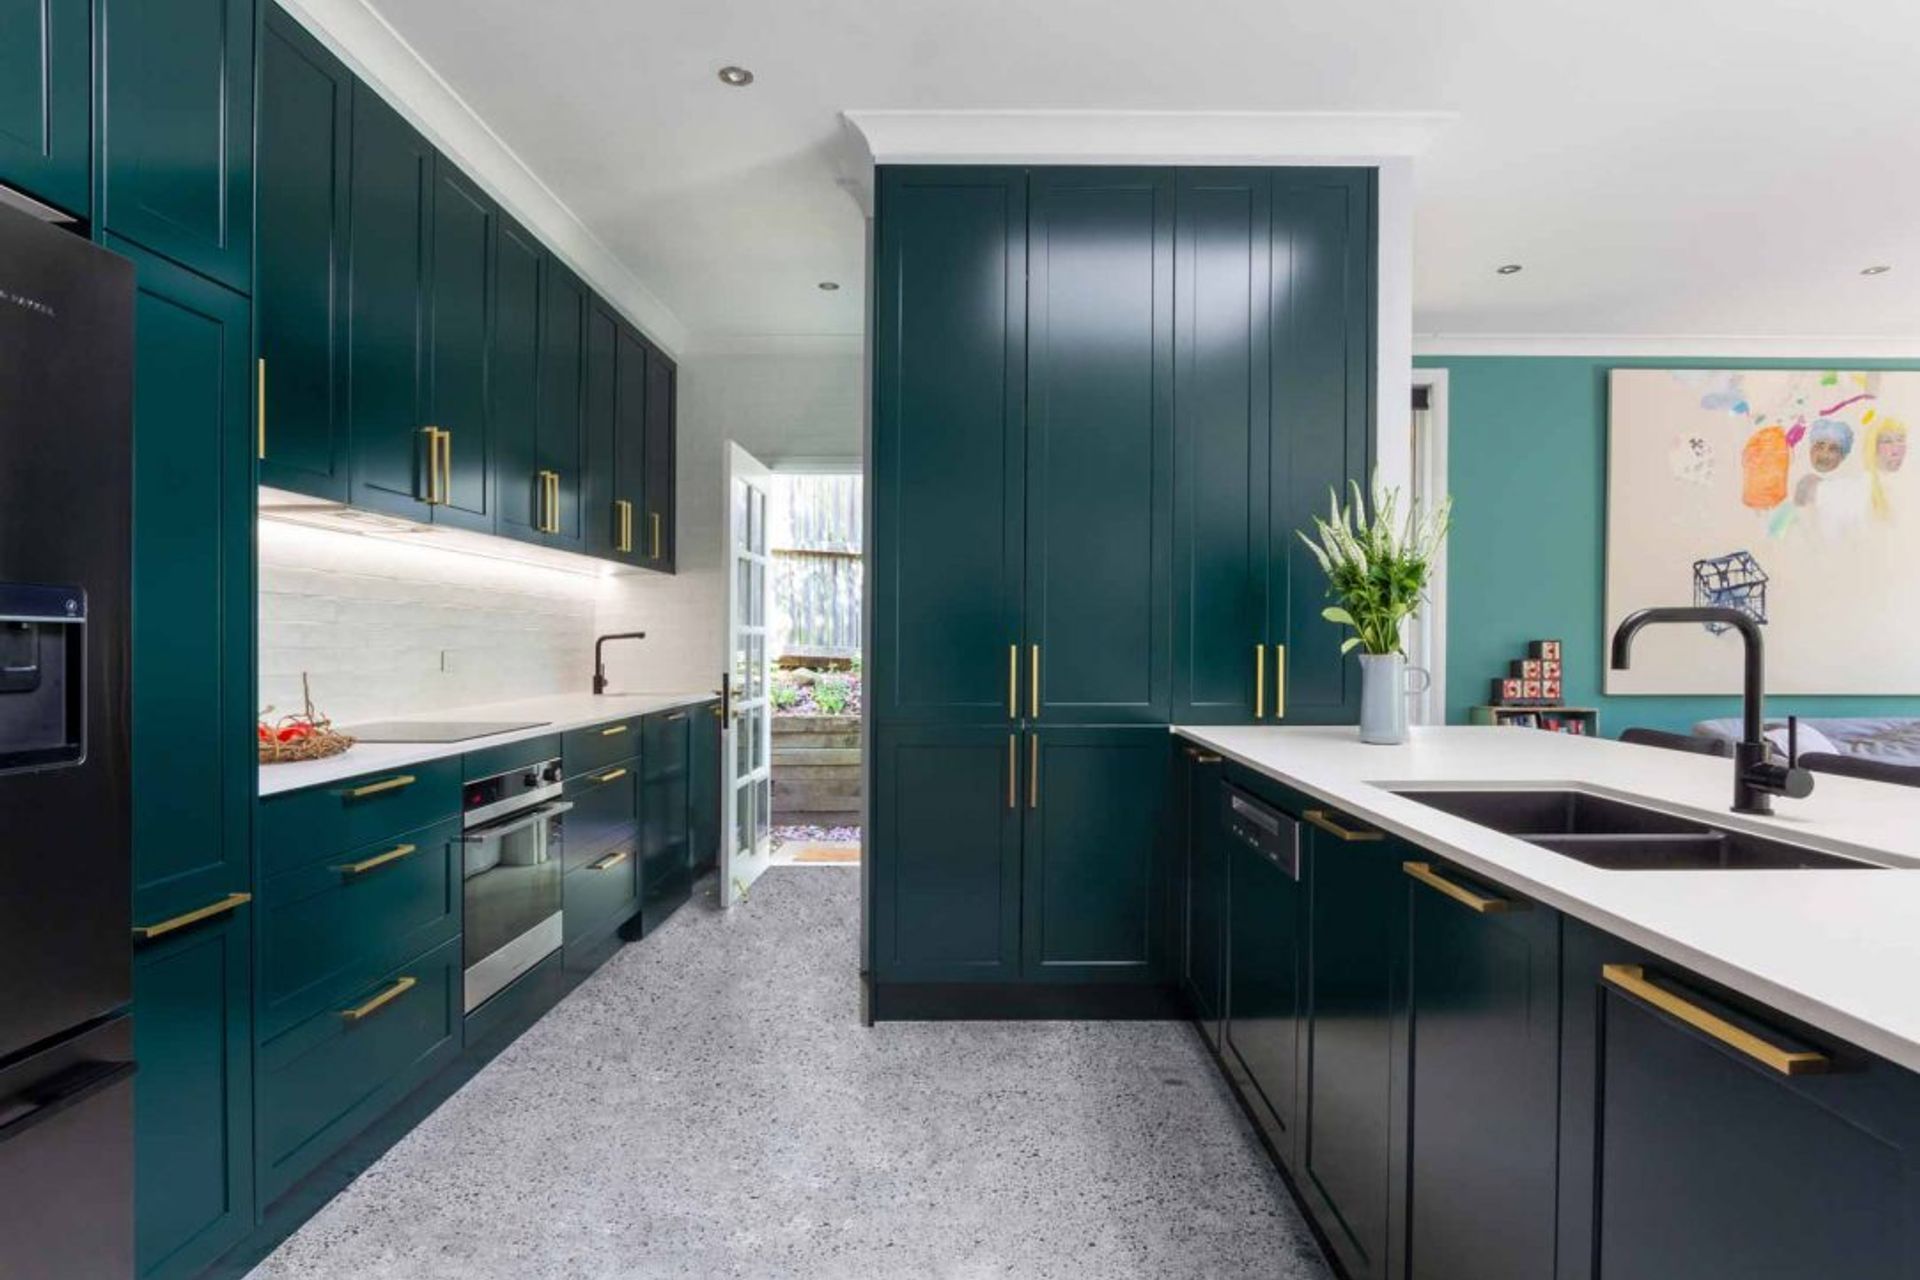 caesarstone-kitchen-design-sydney-green-white-luxury-premier-kitchens-statuario-maximus-02-1084x724.jpg